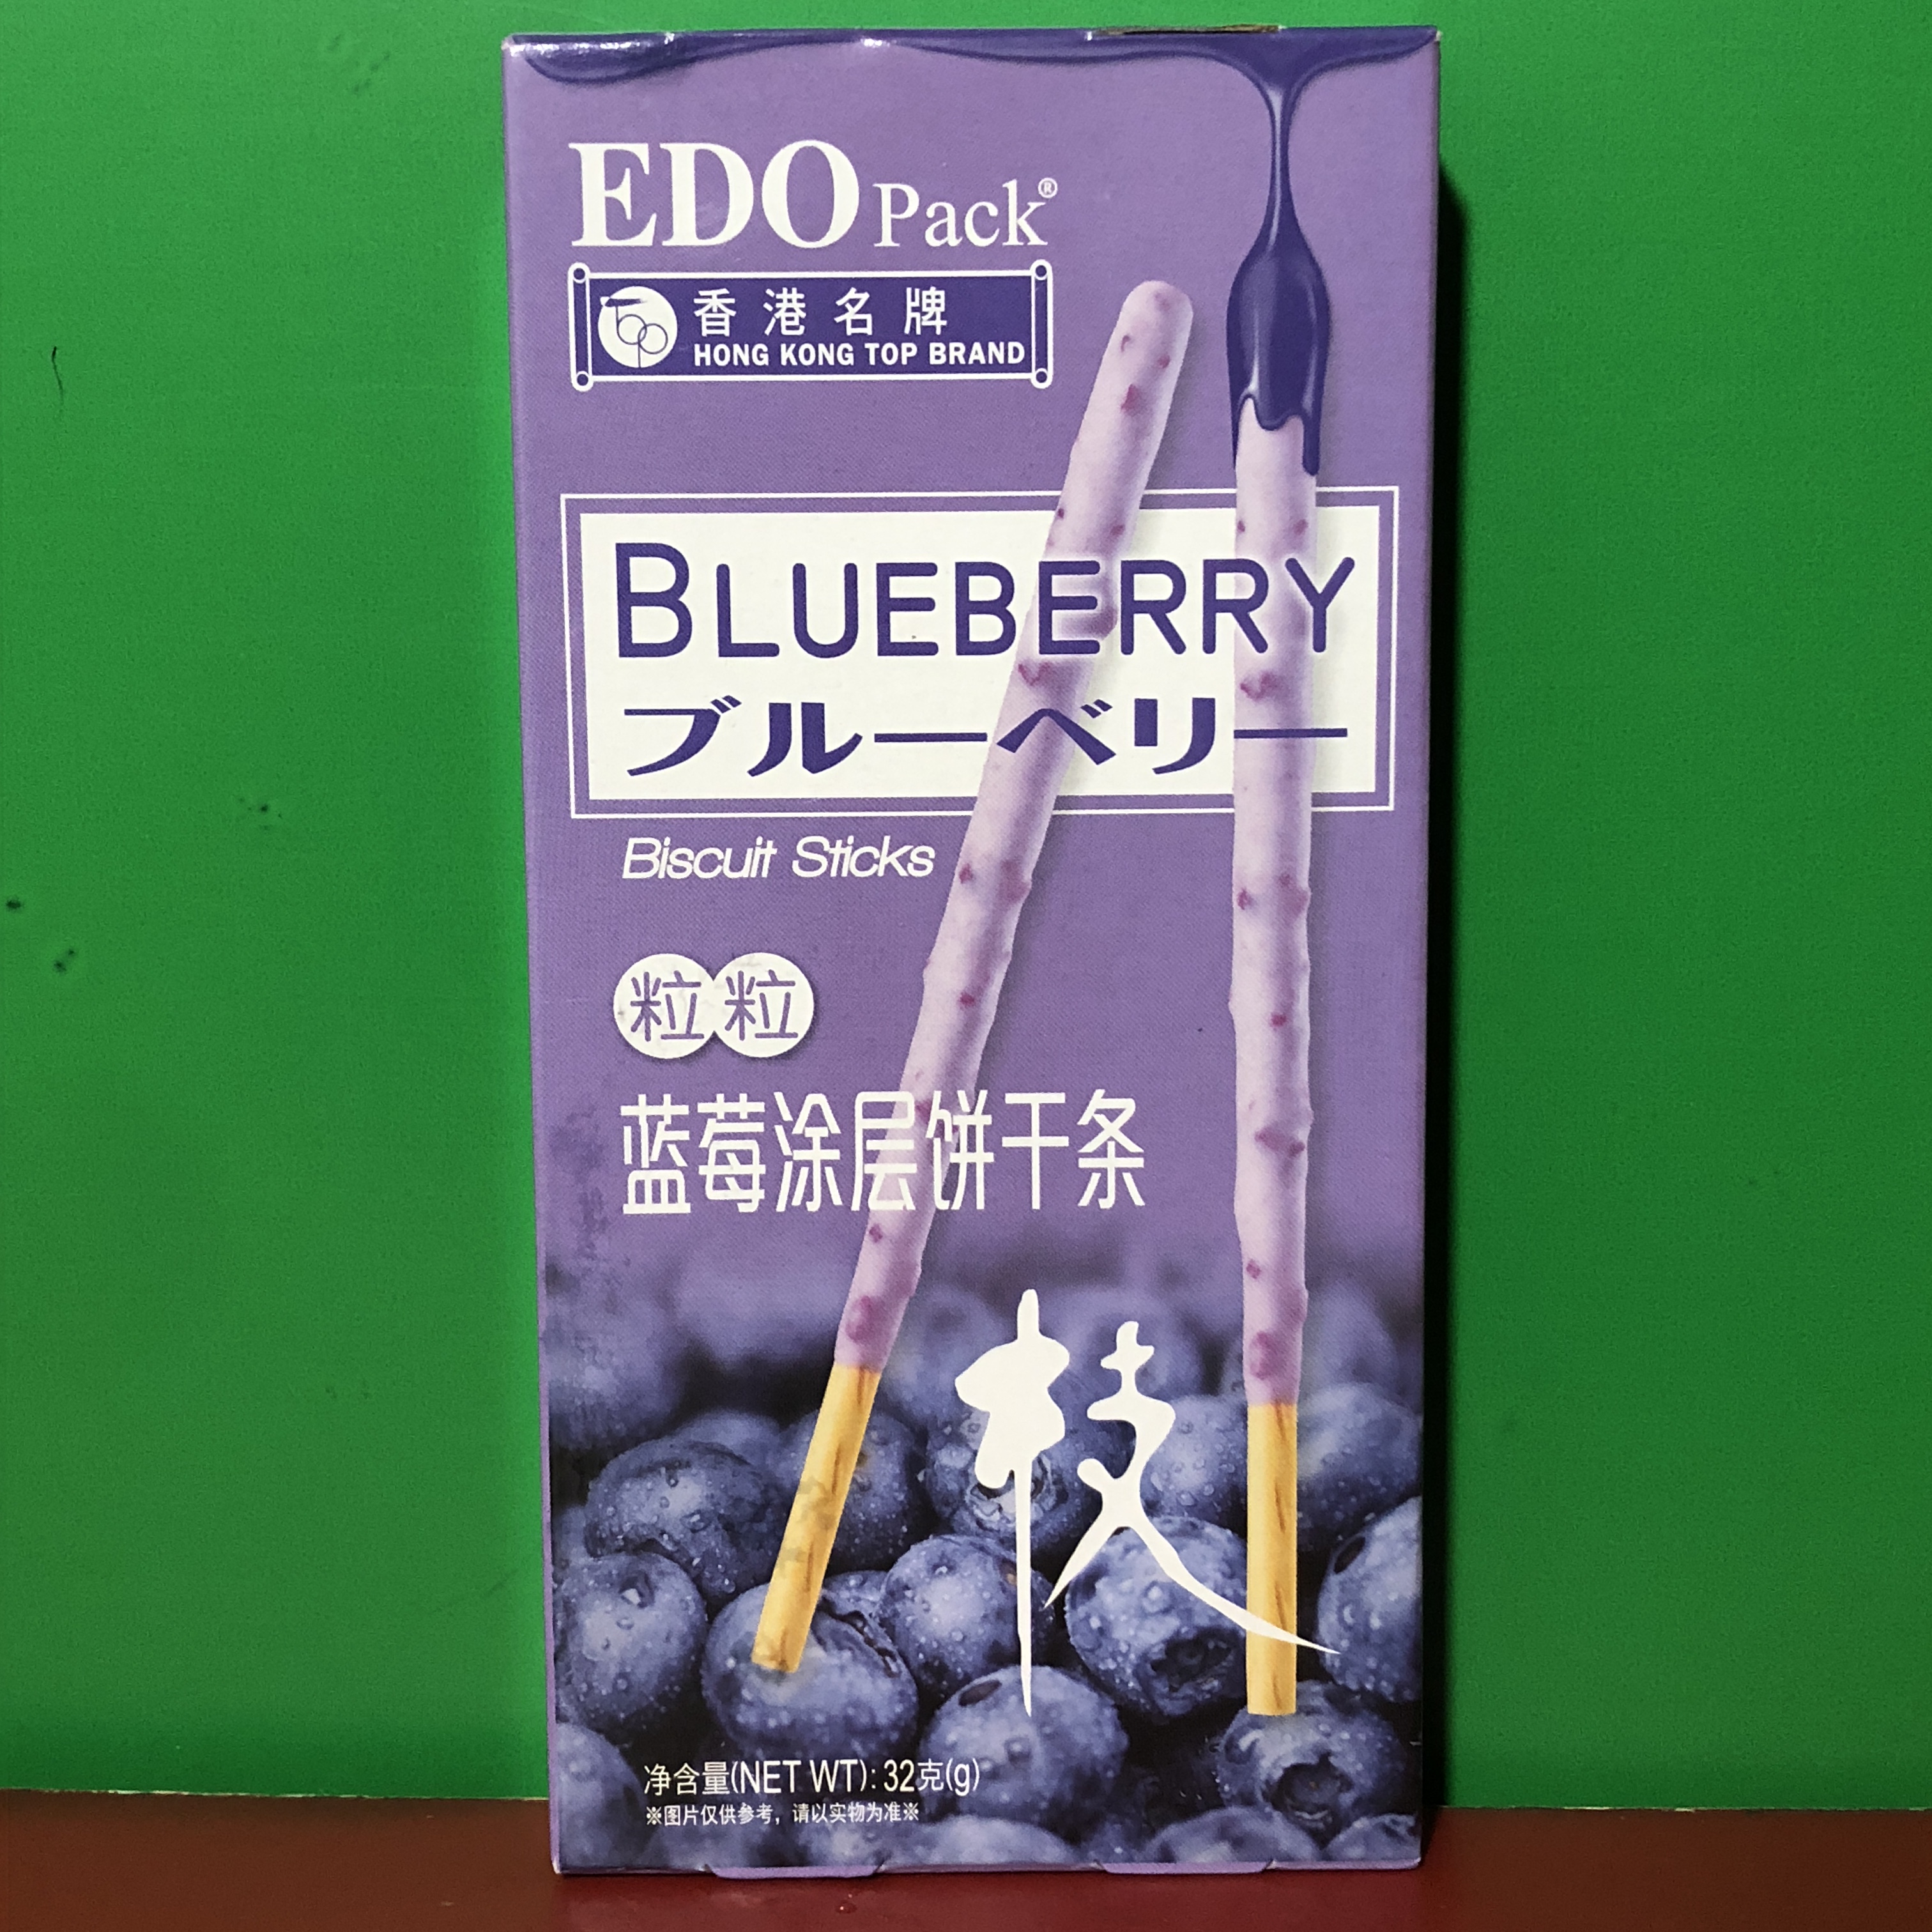 EDO Pack粒粒蓝莓/草莓涂层饼干条32克 香港品牌 美味零食 临期价